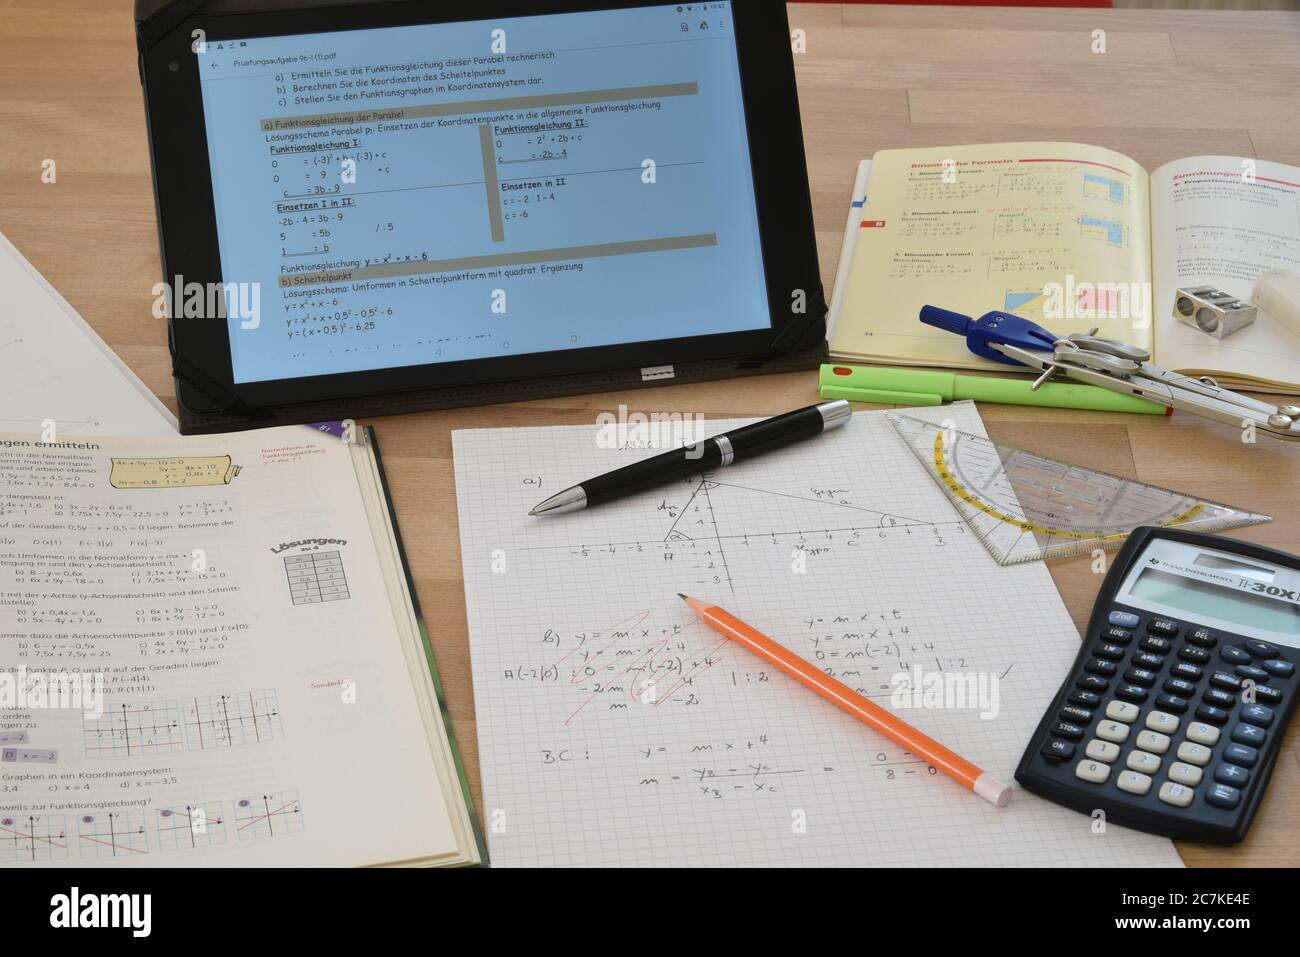 Home schooling, factual analysis, corona, mathematics, school supplies Stock Photo